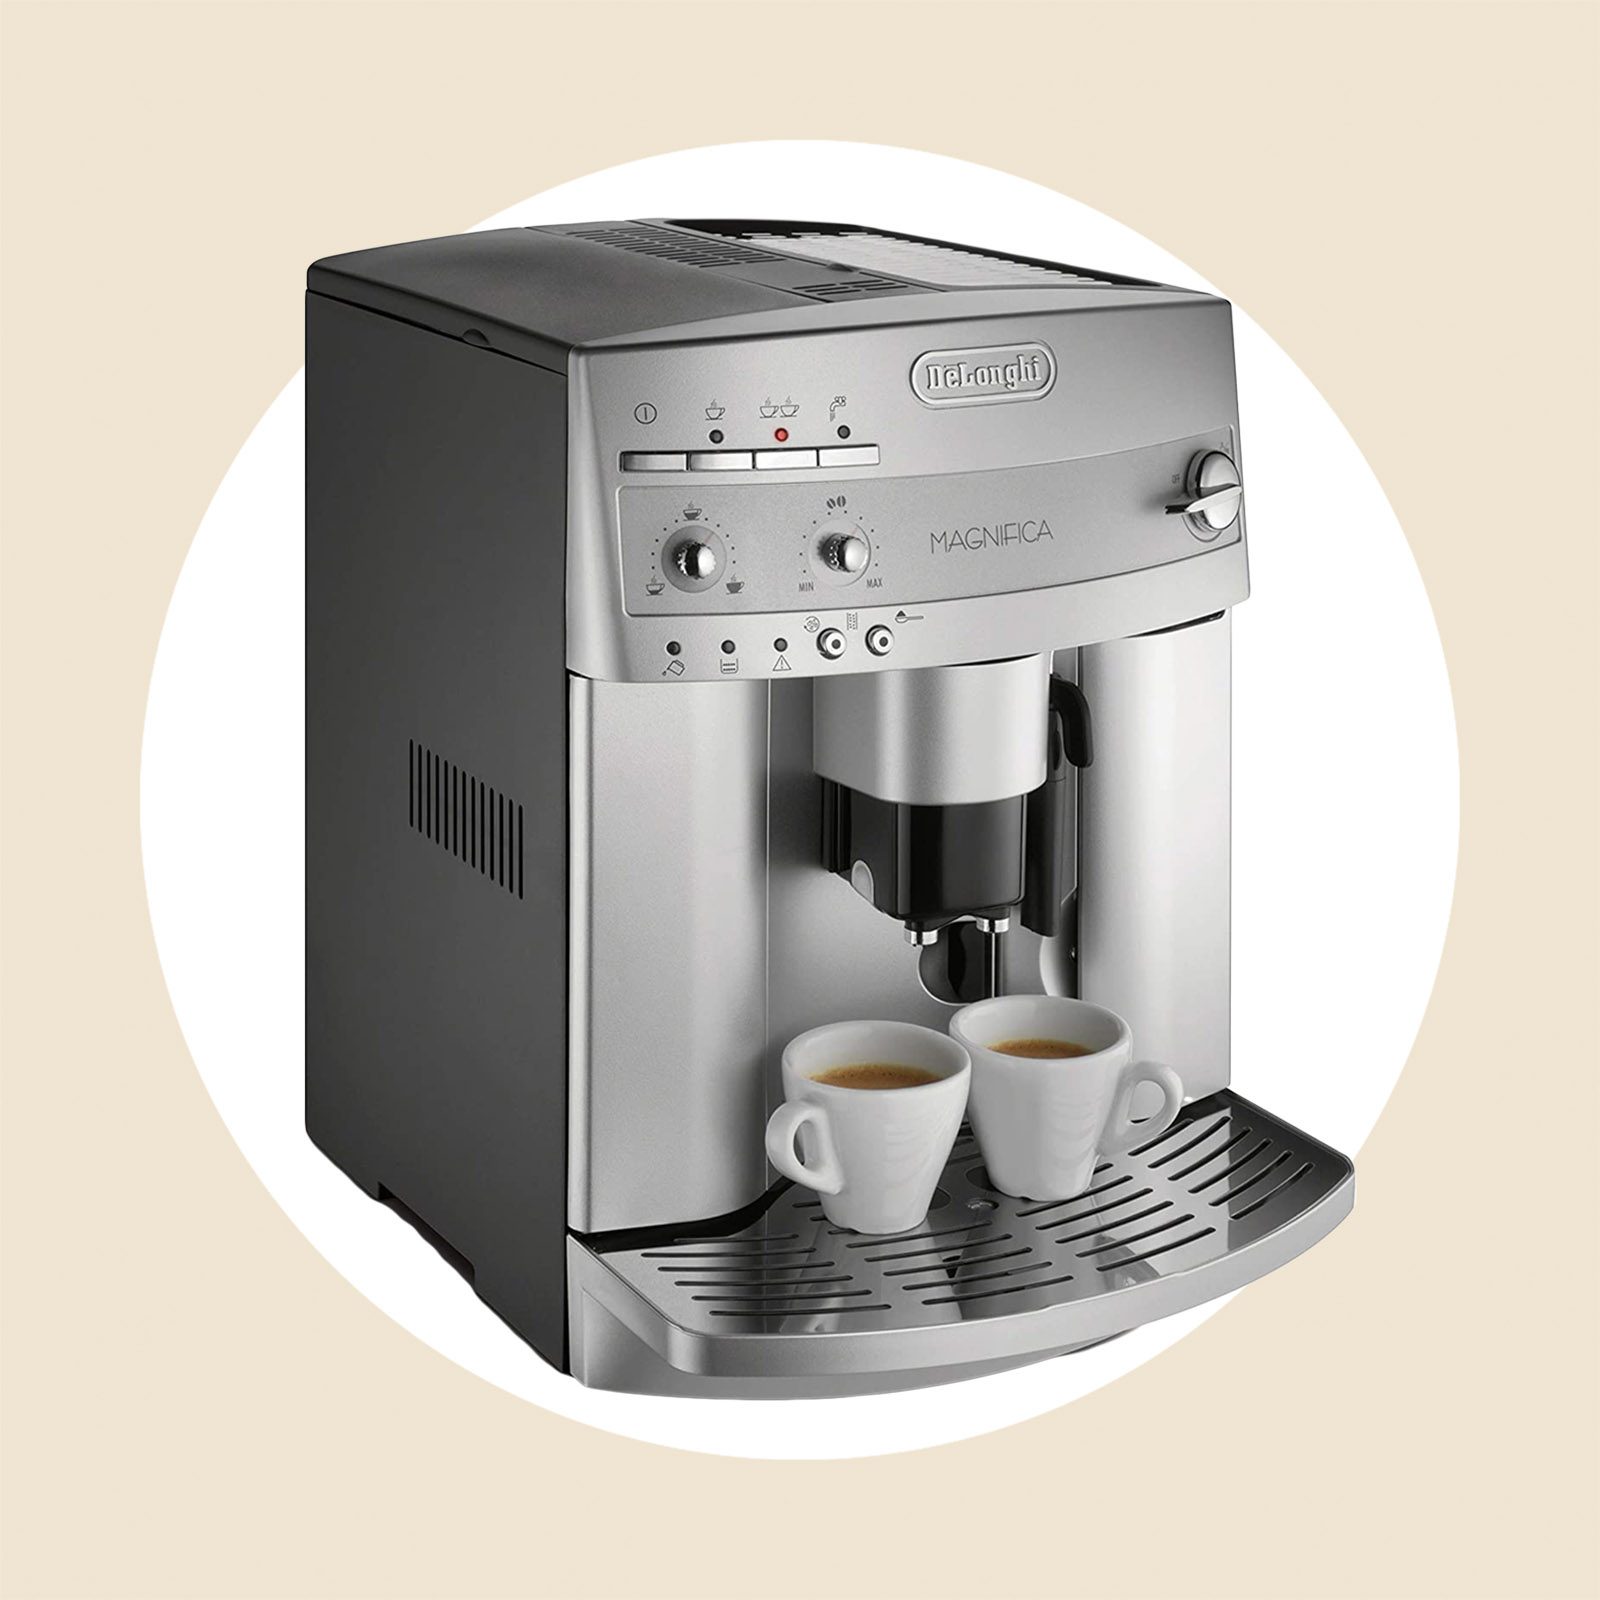 https://www.tasteofhome.com/wp-content/uploads/2022/02/DeLonghi-Magnifica-Super-Automatic-Espresso-Coffee-Machine-via-amazon.com-ecomm.jpg?fit=700%2C700